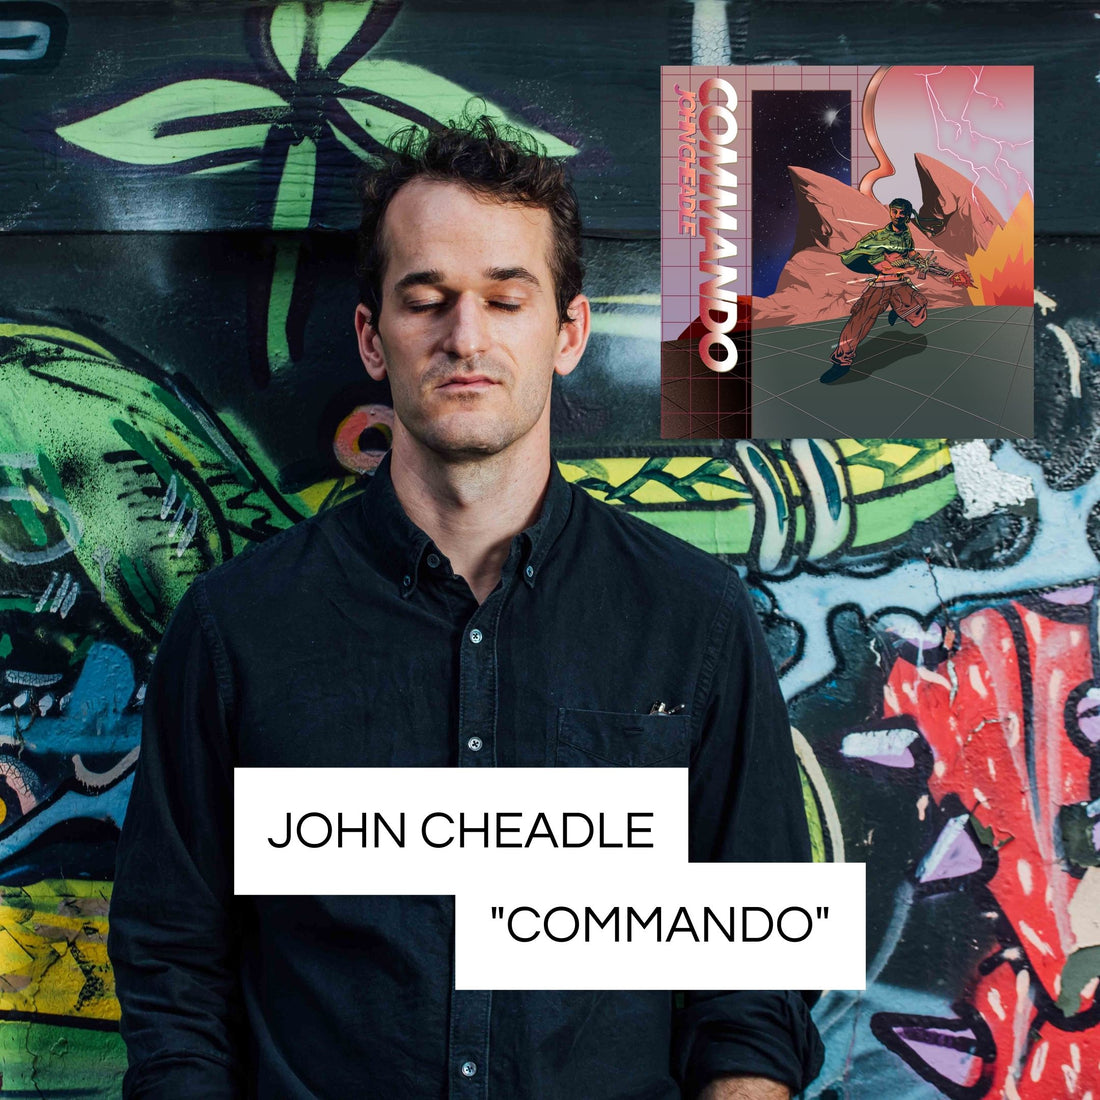 John Cheadle's Debut LP "Commando" Out Today!